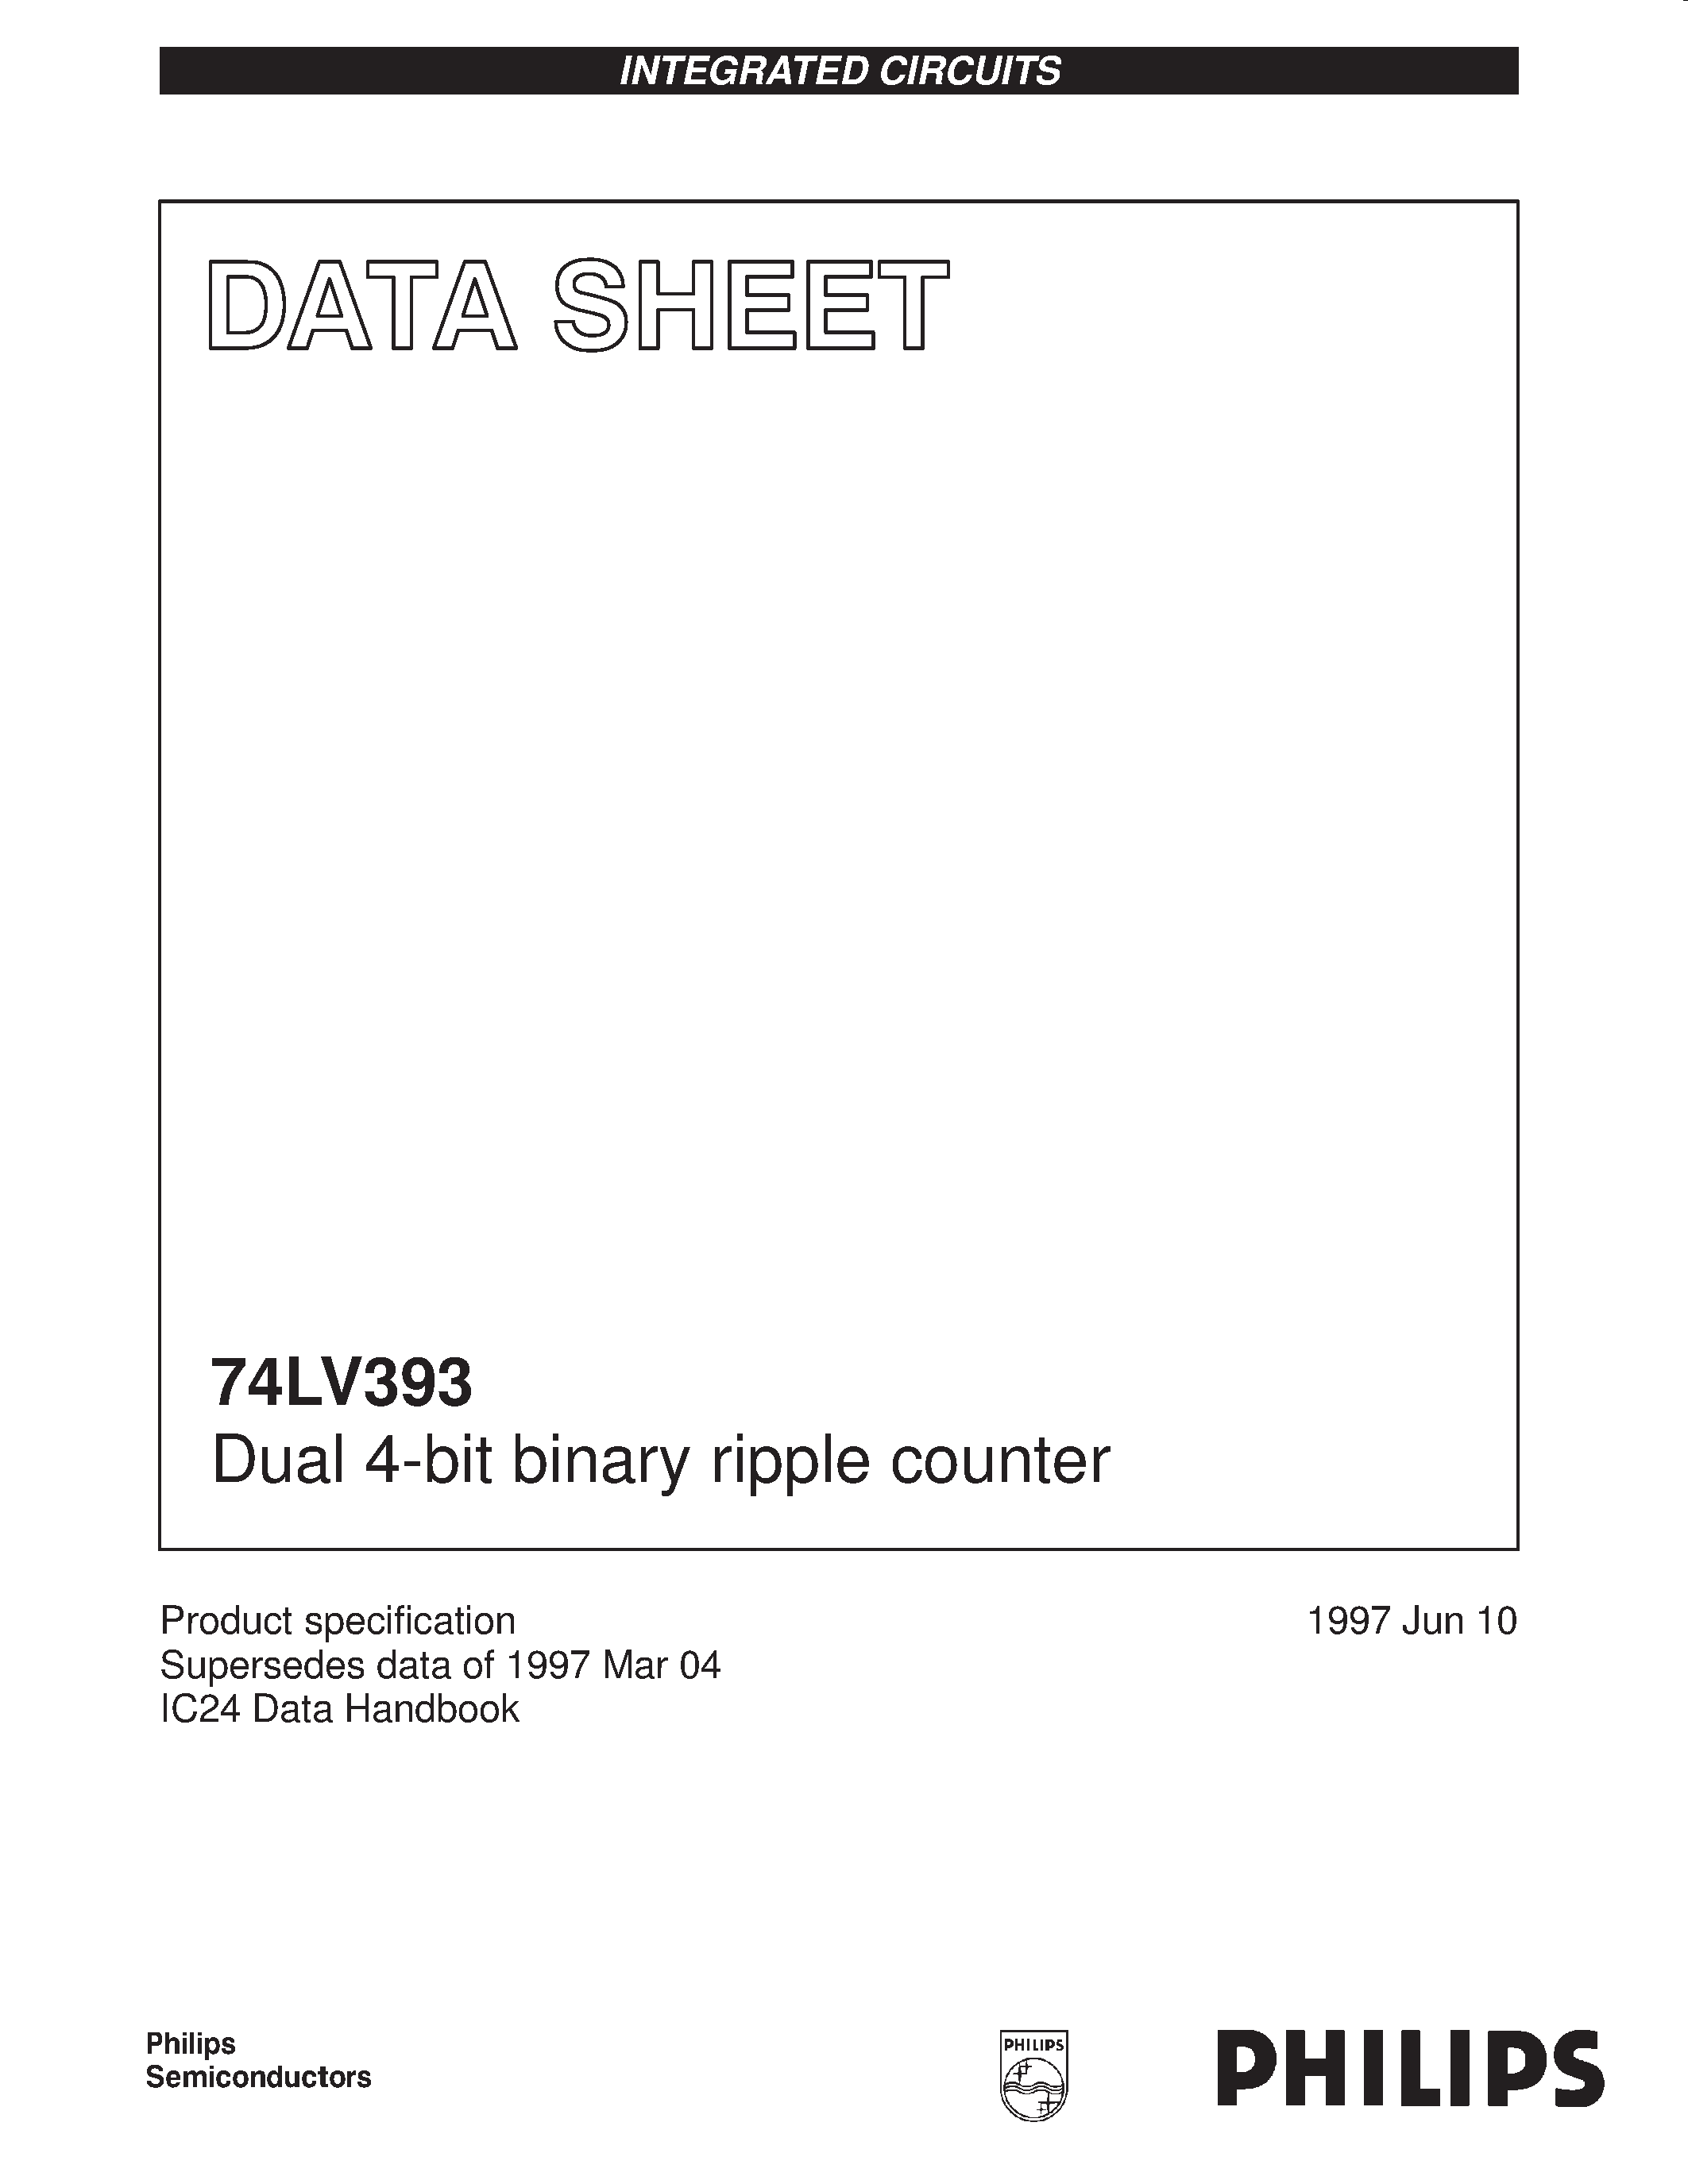 Даташит 74LV393 - Dual 4-bit binary ripple counter страница 1